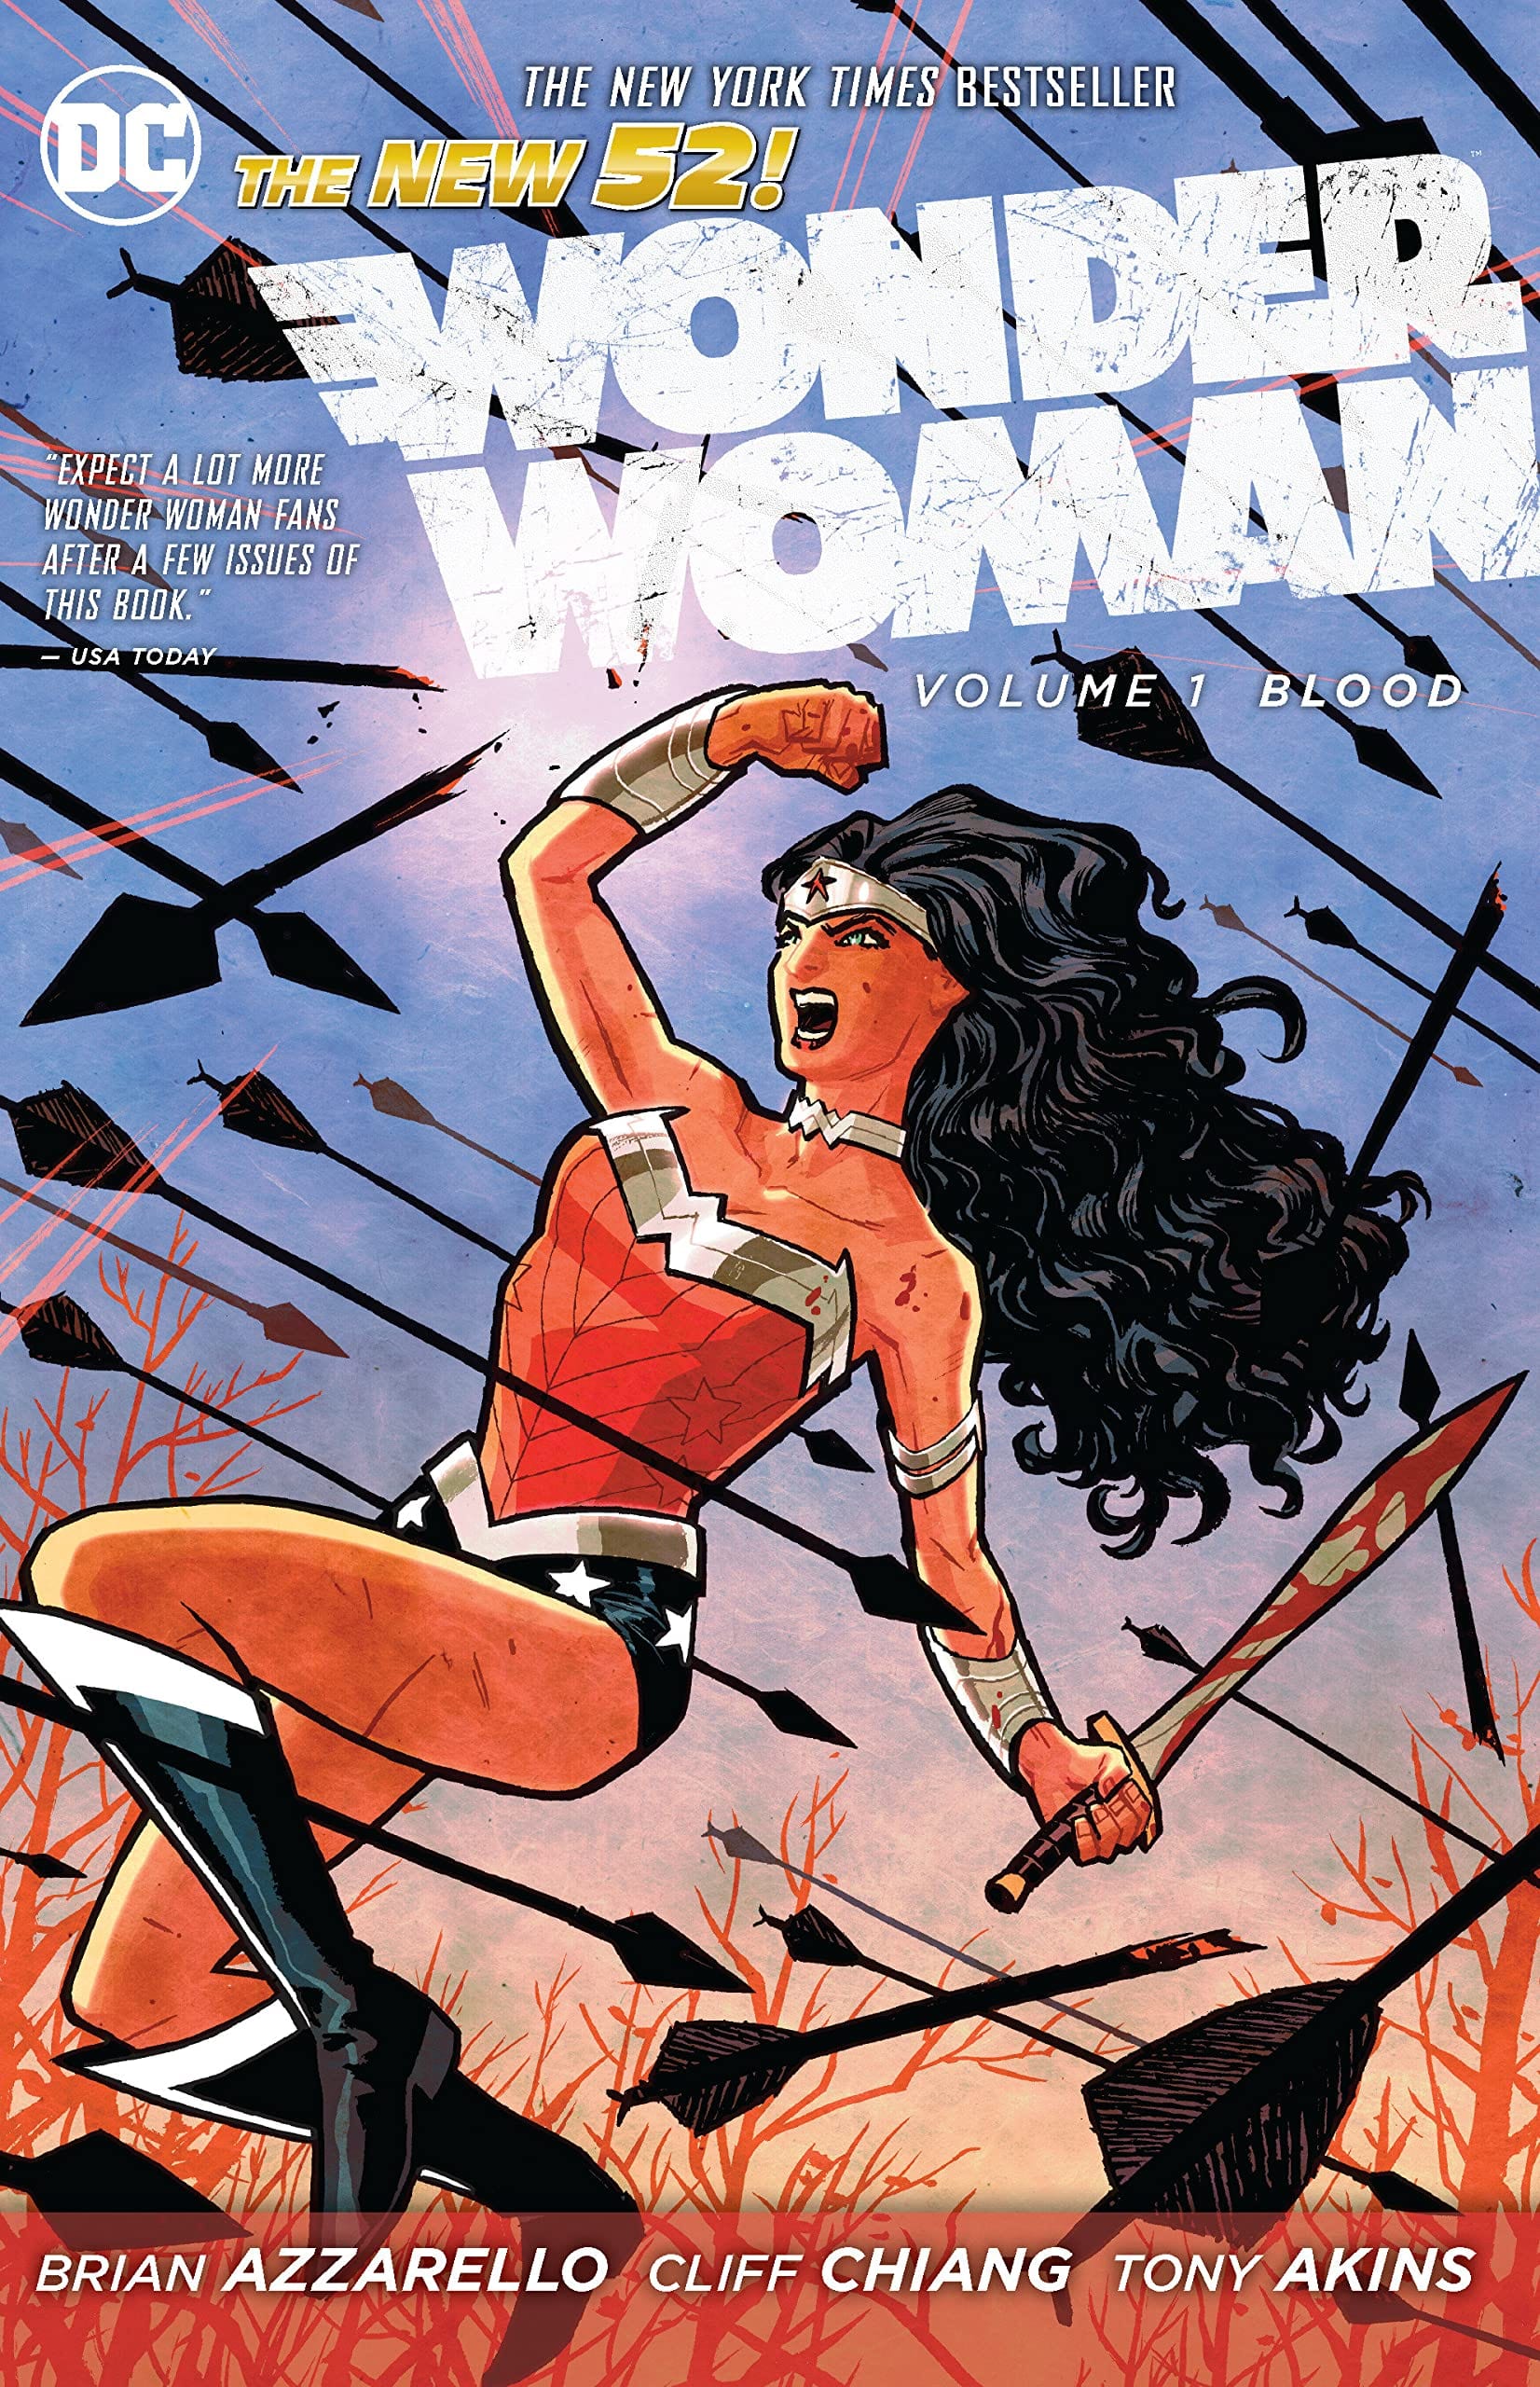 Wonder Woman Vol. 1: Blood TP (New 52) - Third Eye